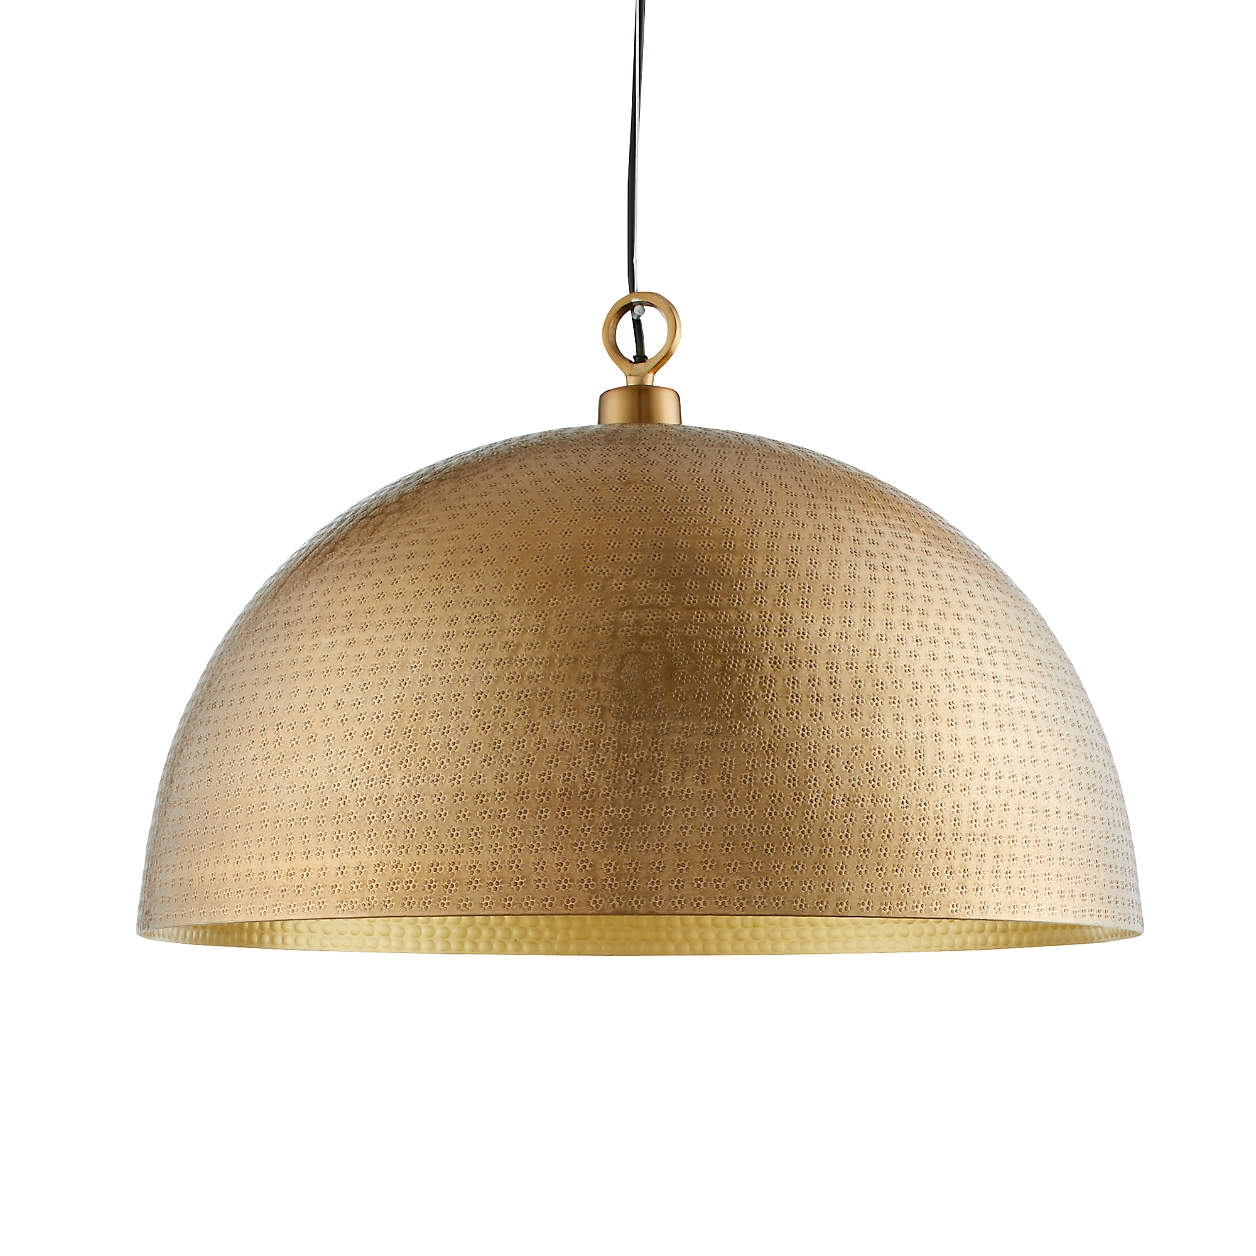 Rodan Hammered Brass Metal Dome Pendant Light - Image 0